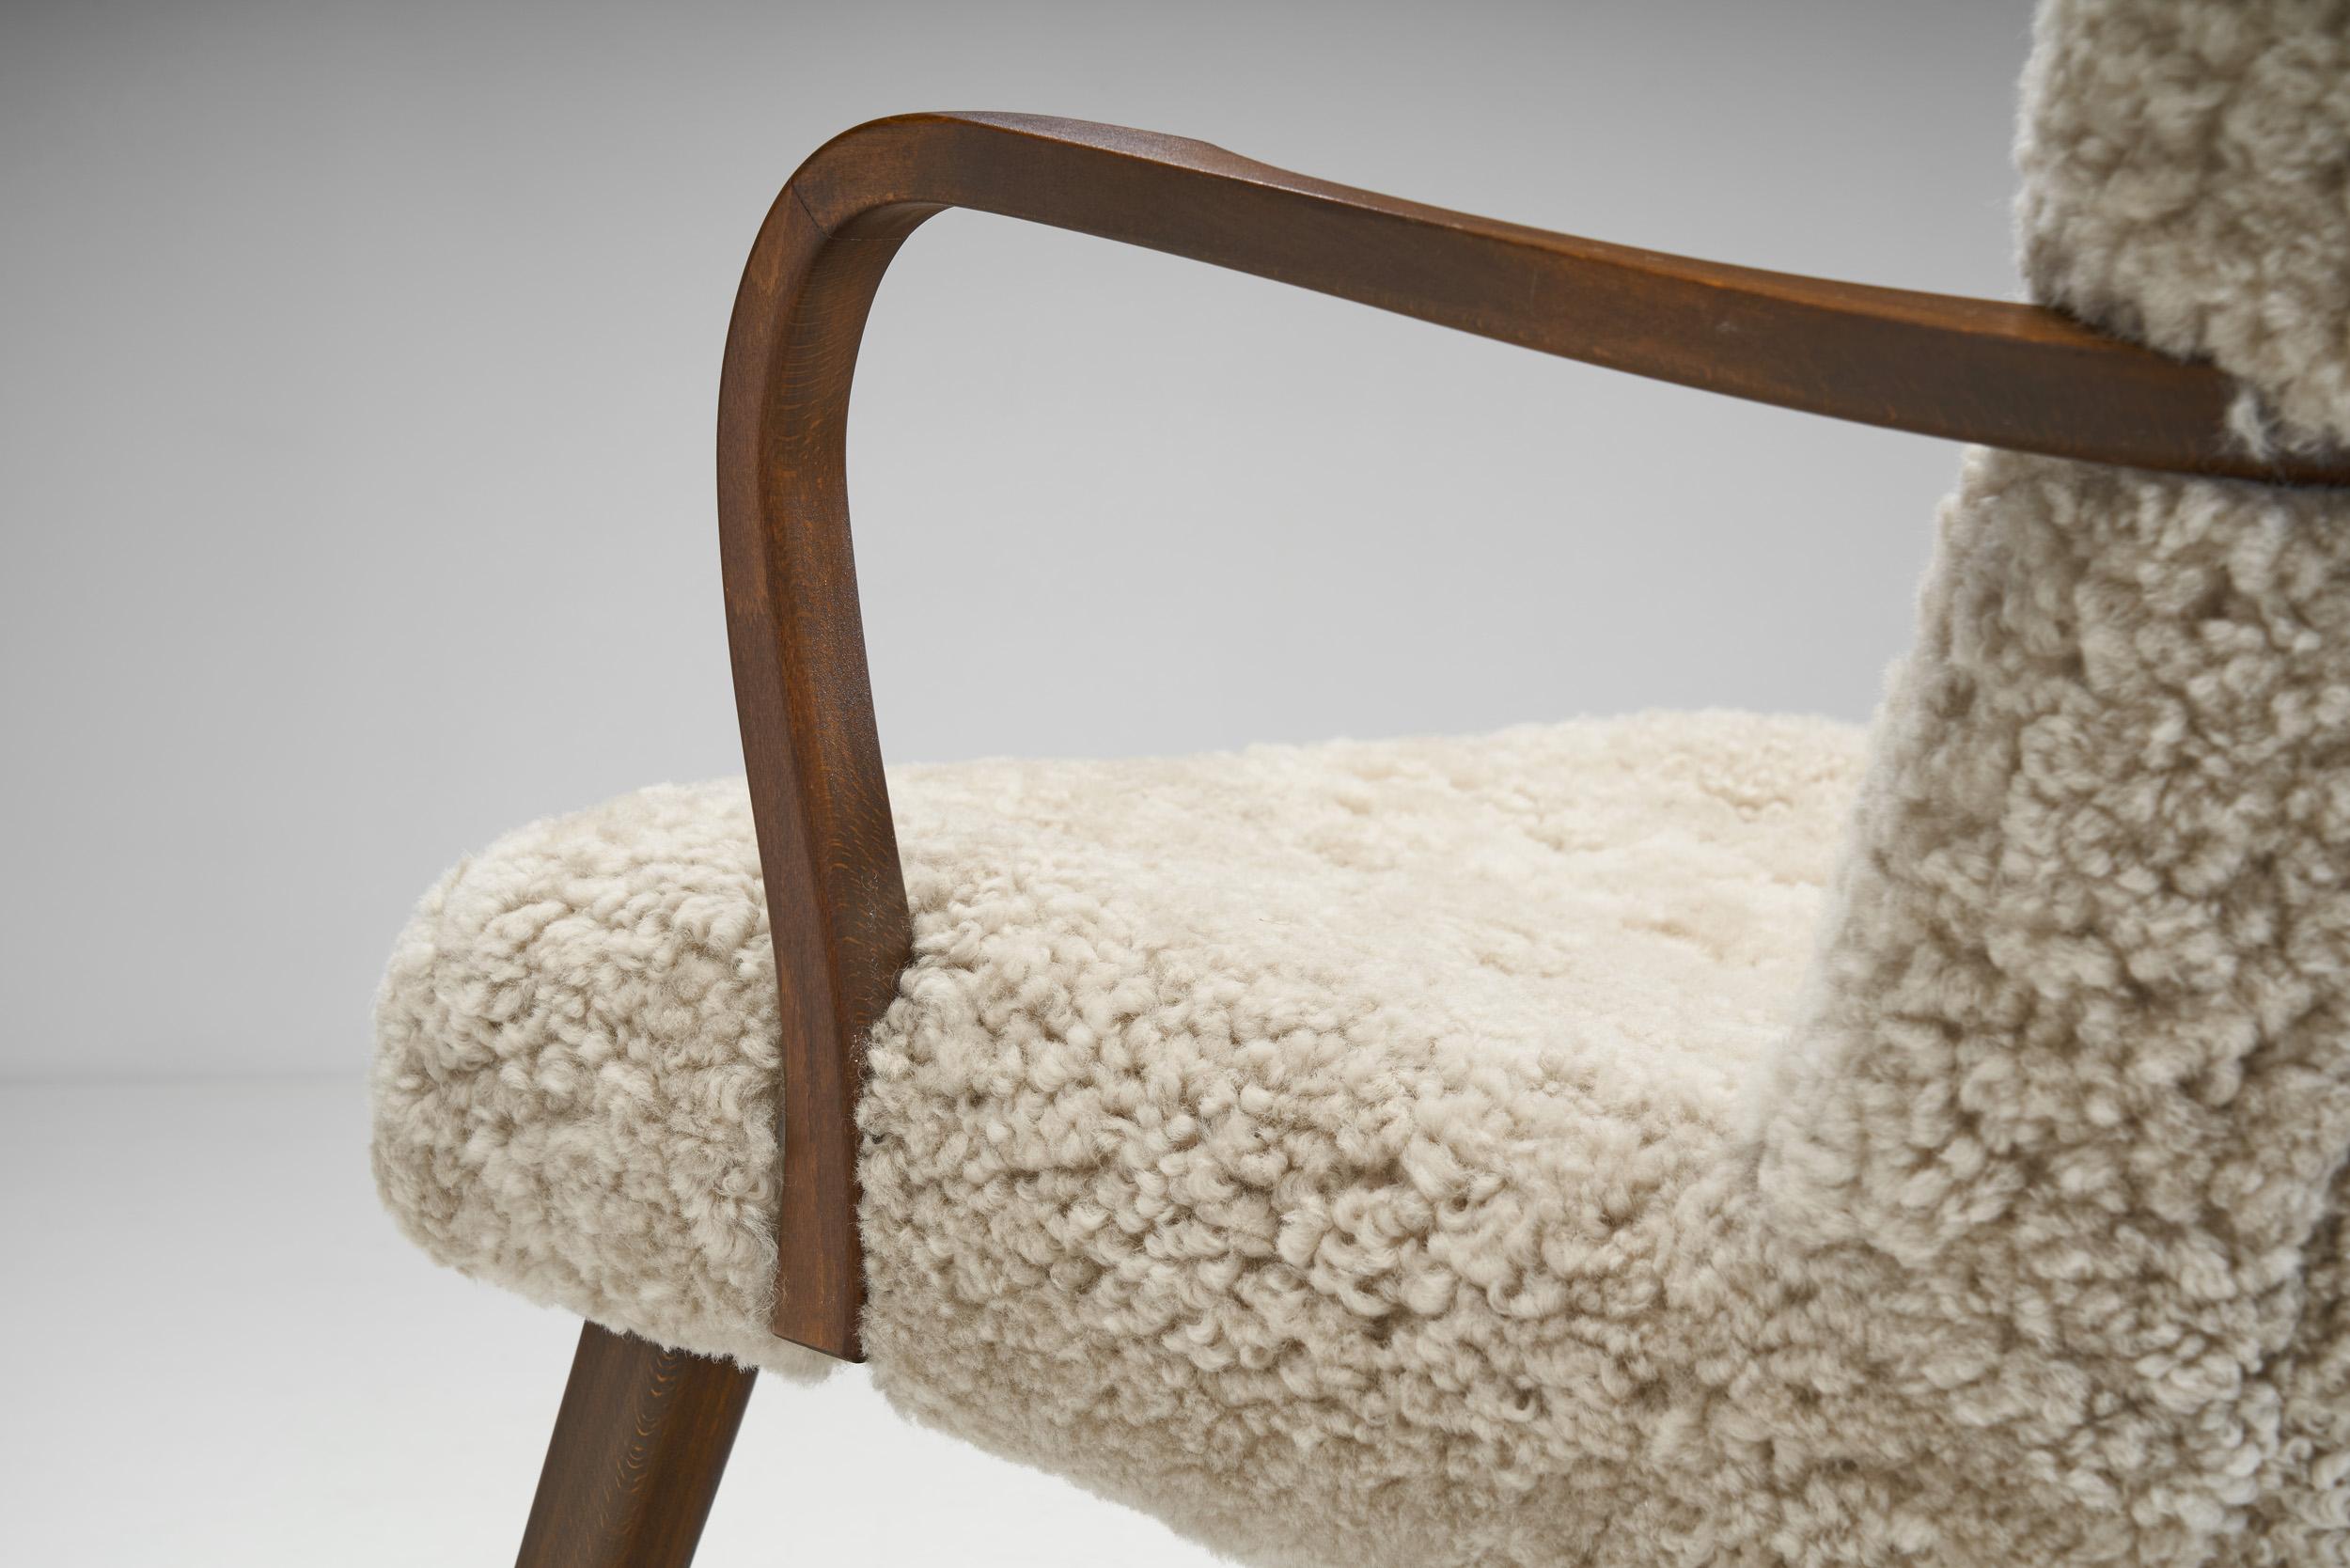 Stained Beech Easy Chair in Sheepskin by Danish Cabinetmaker, Denmark 1940s For Sale 5